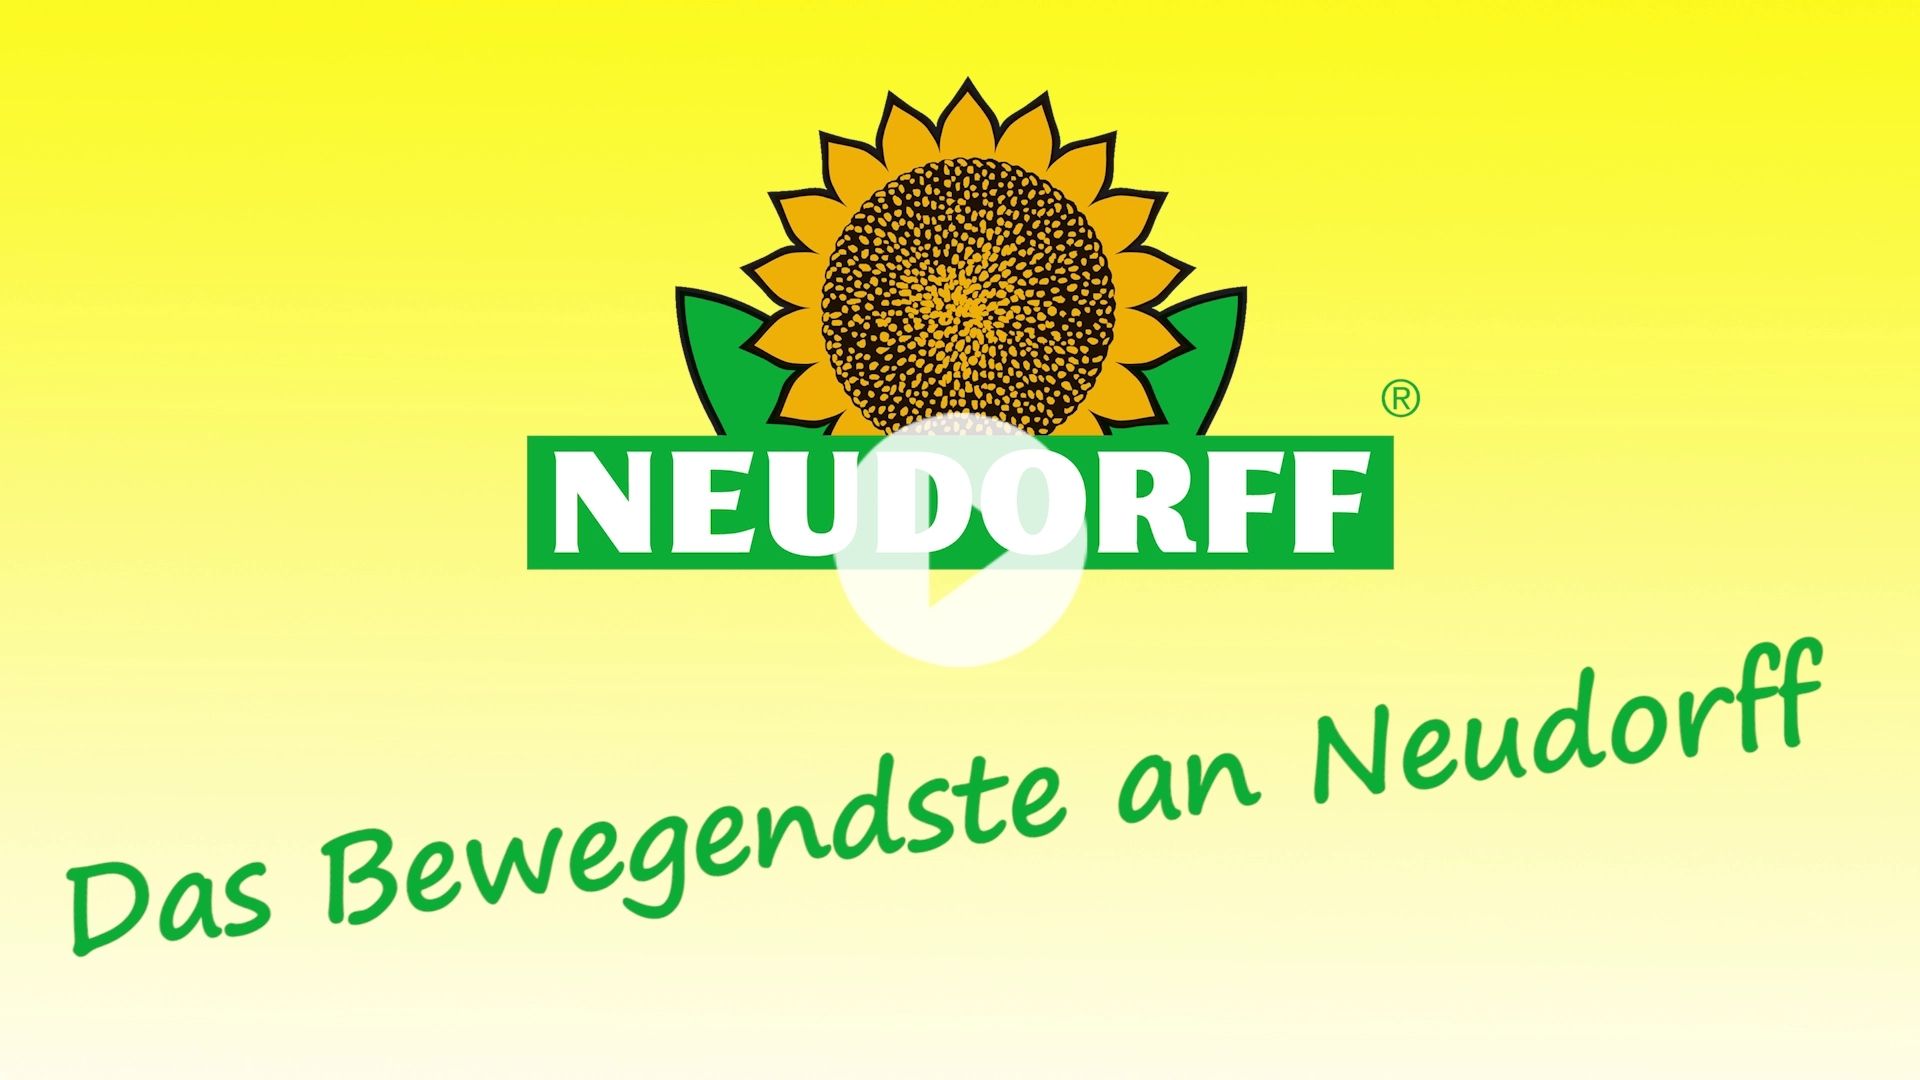 Das Bewegendste an Neudorff